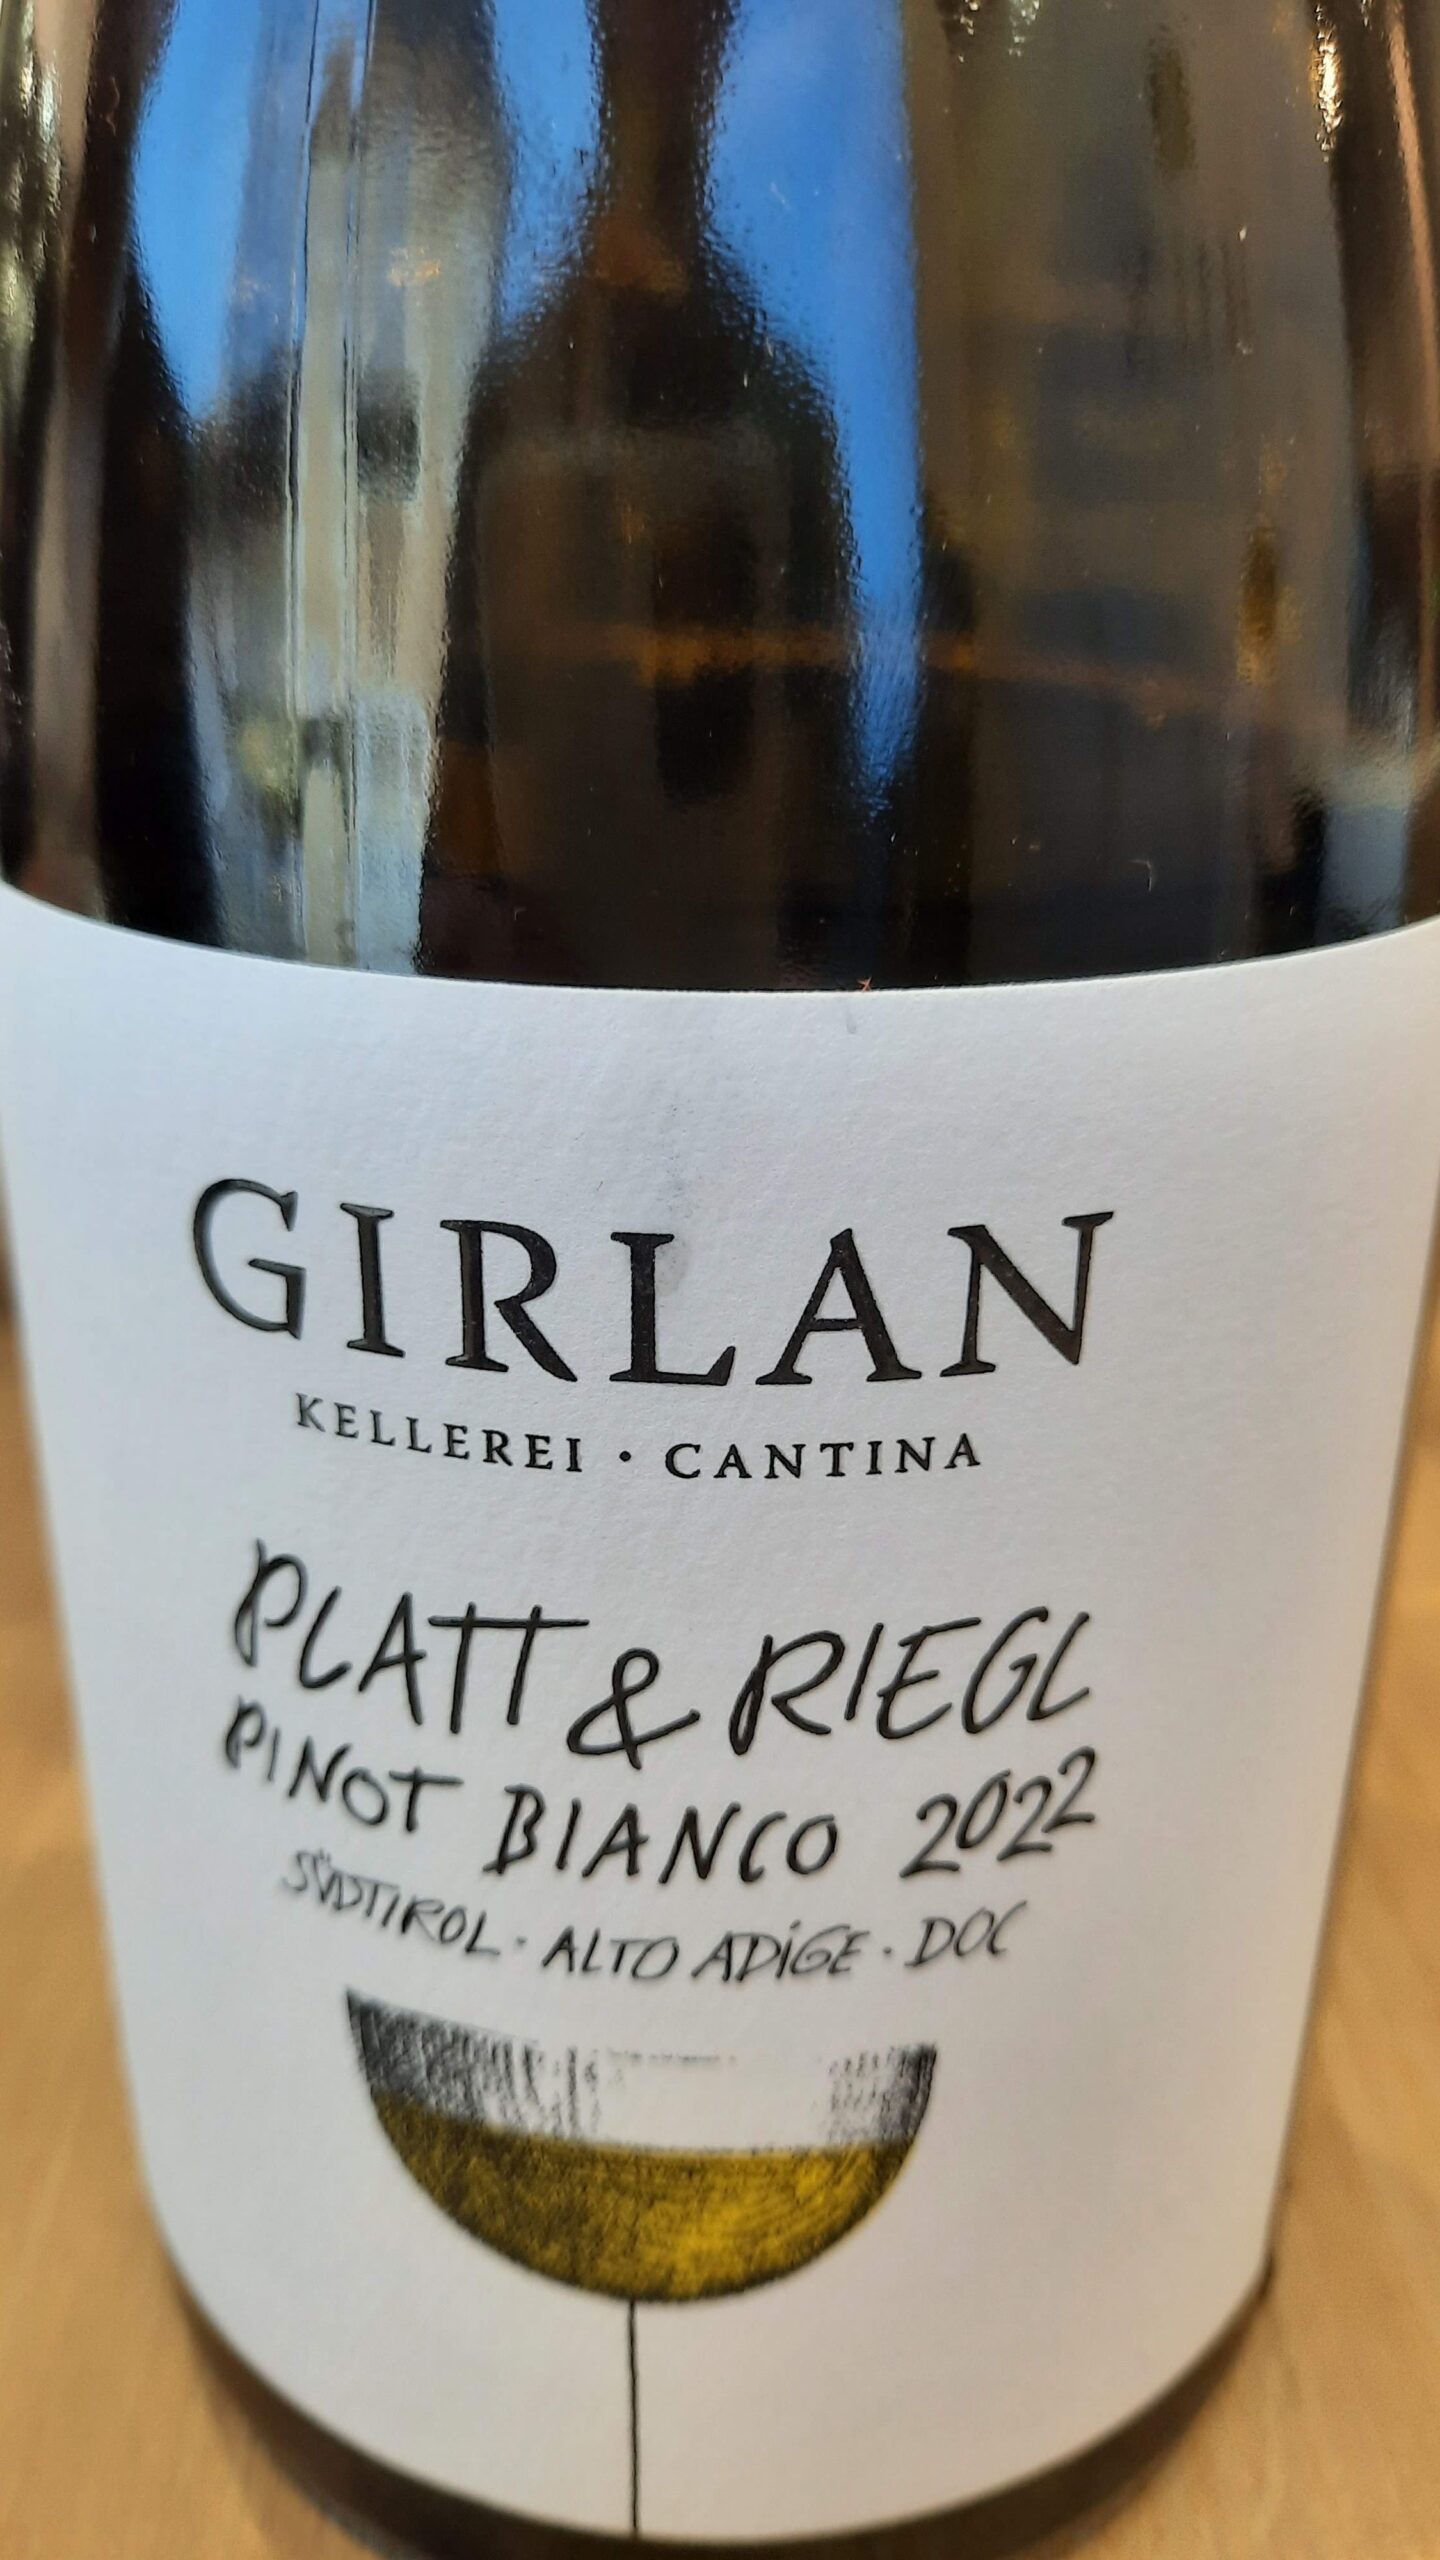 Platt & Riegl Pinot Bianco Alto Adige Doc 2022, Cantina Girla, foto di Adriano Guerri